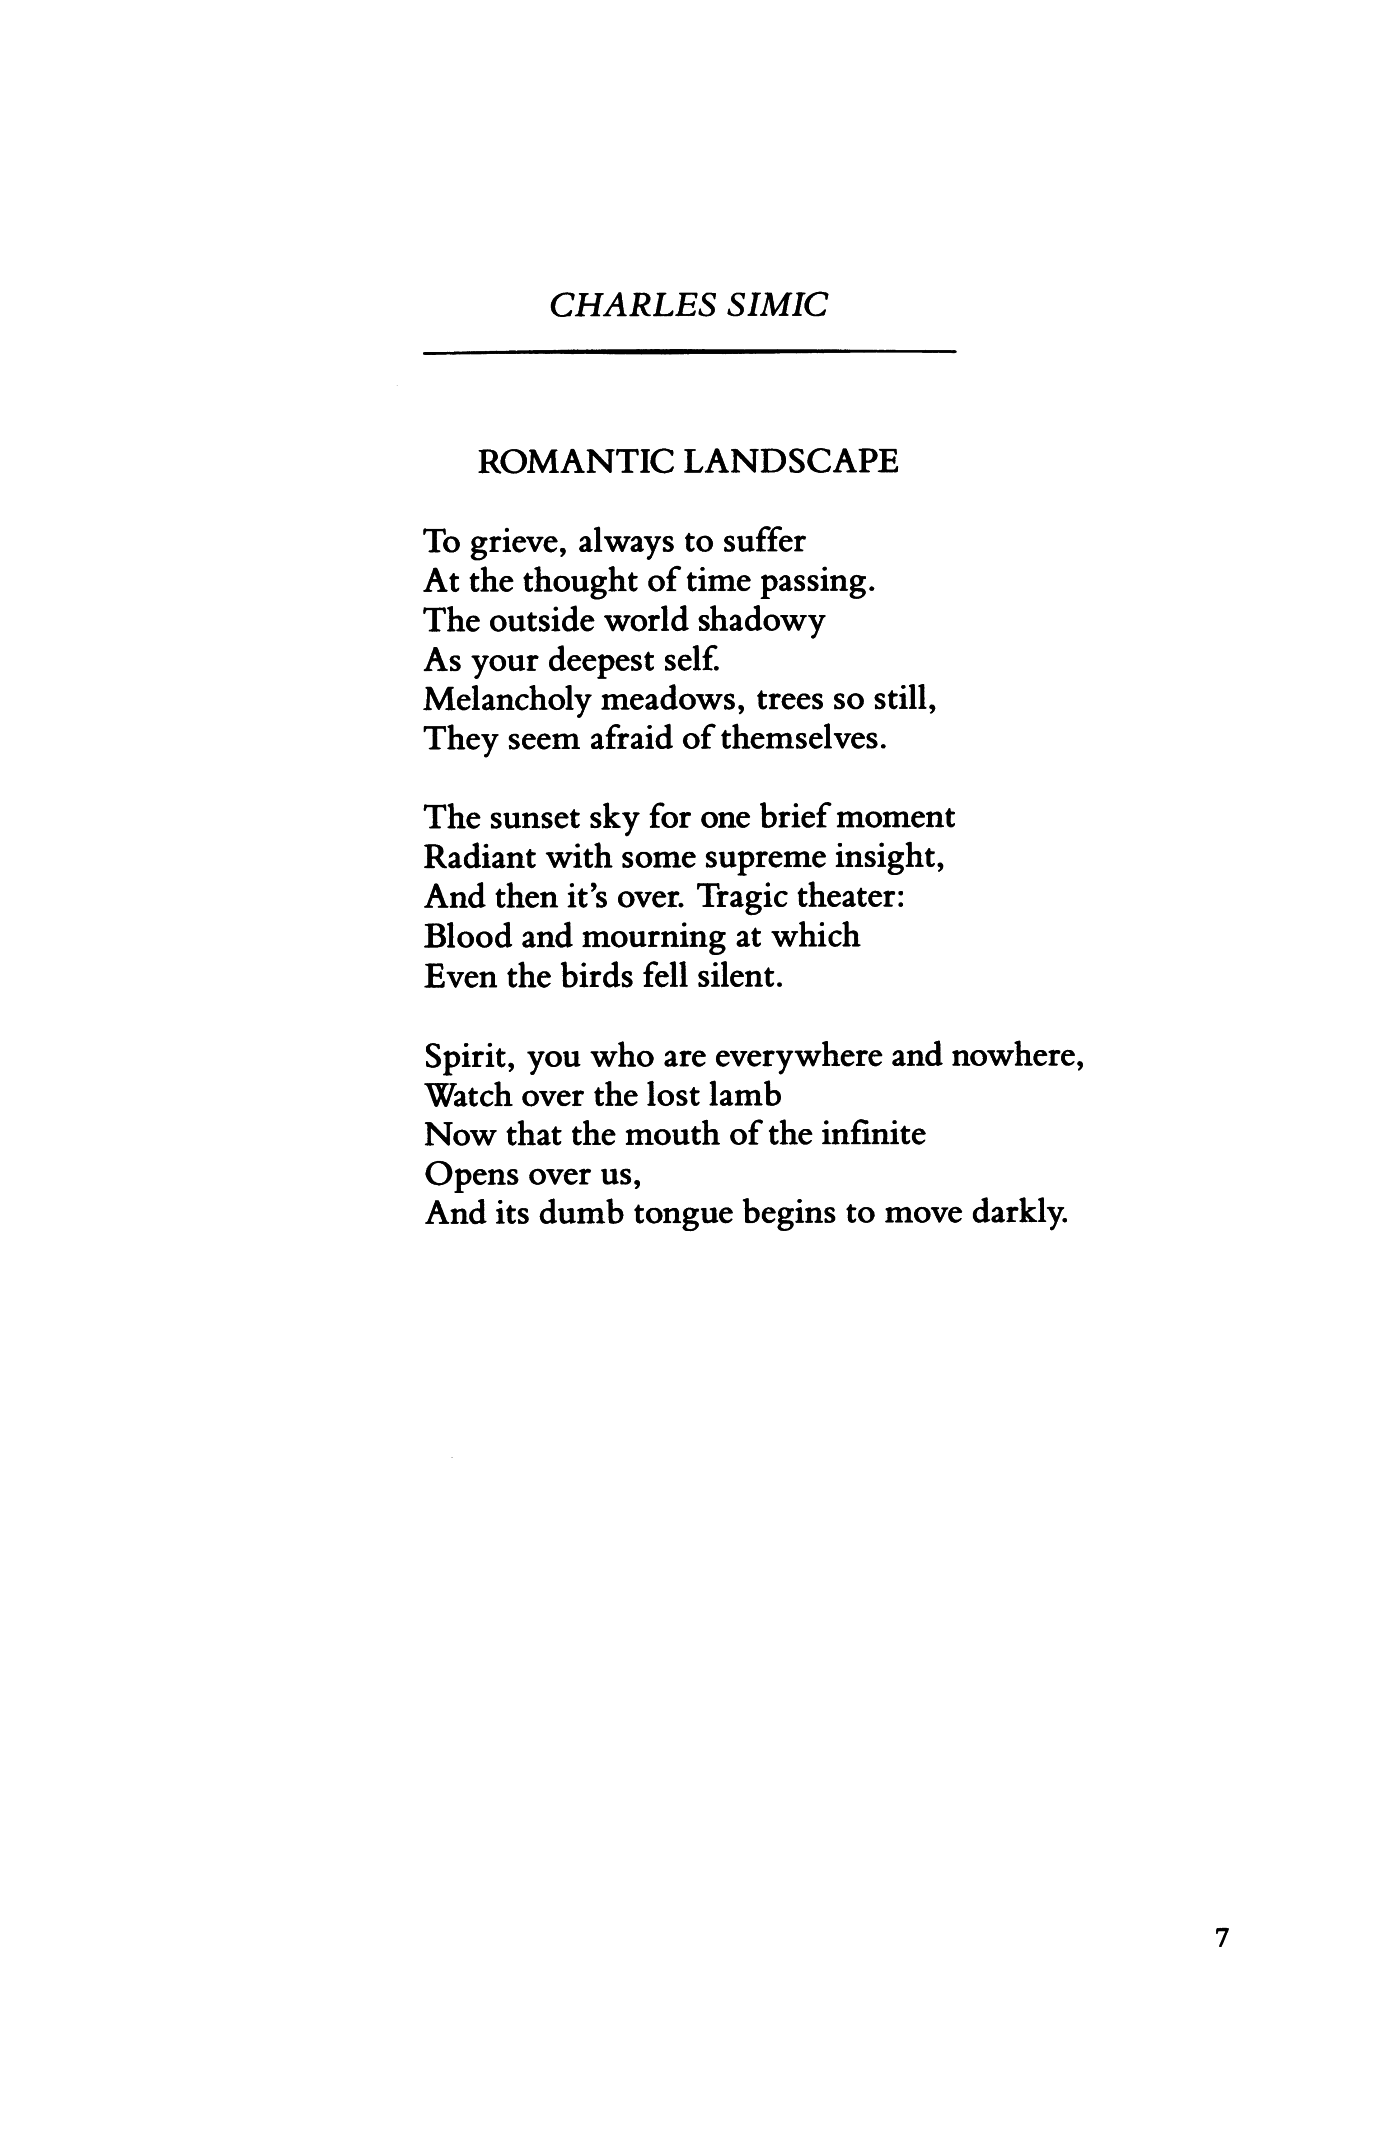 romanticism poem